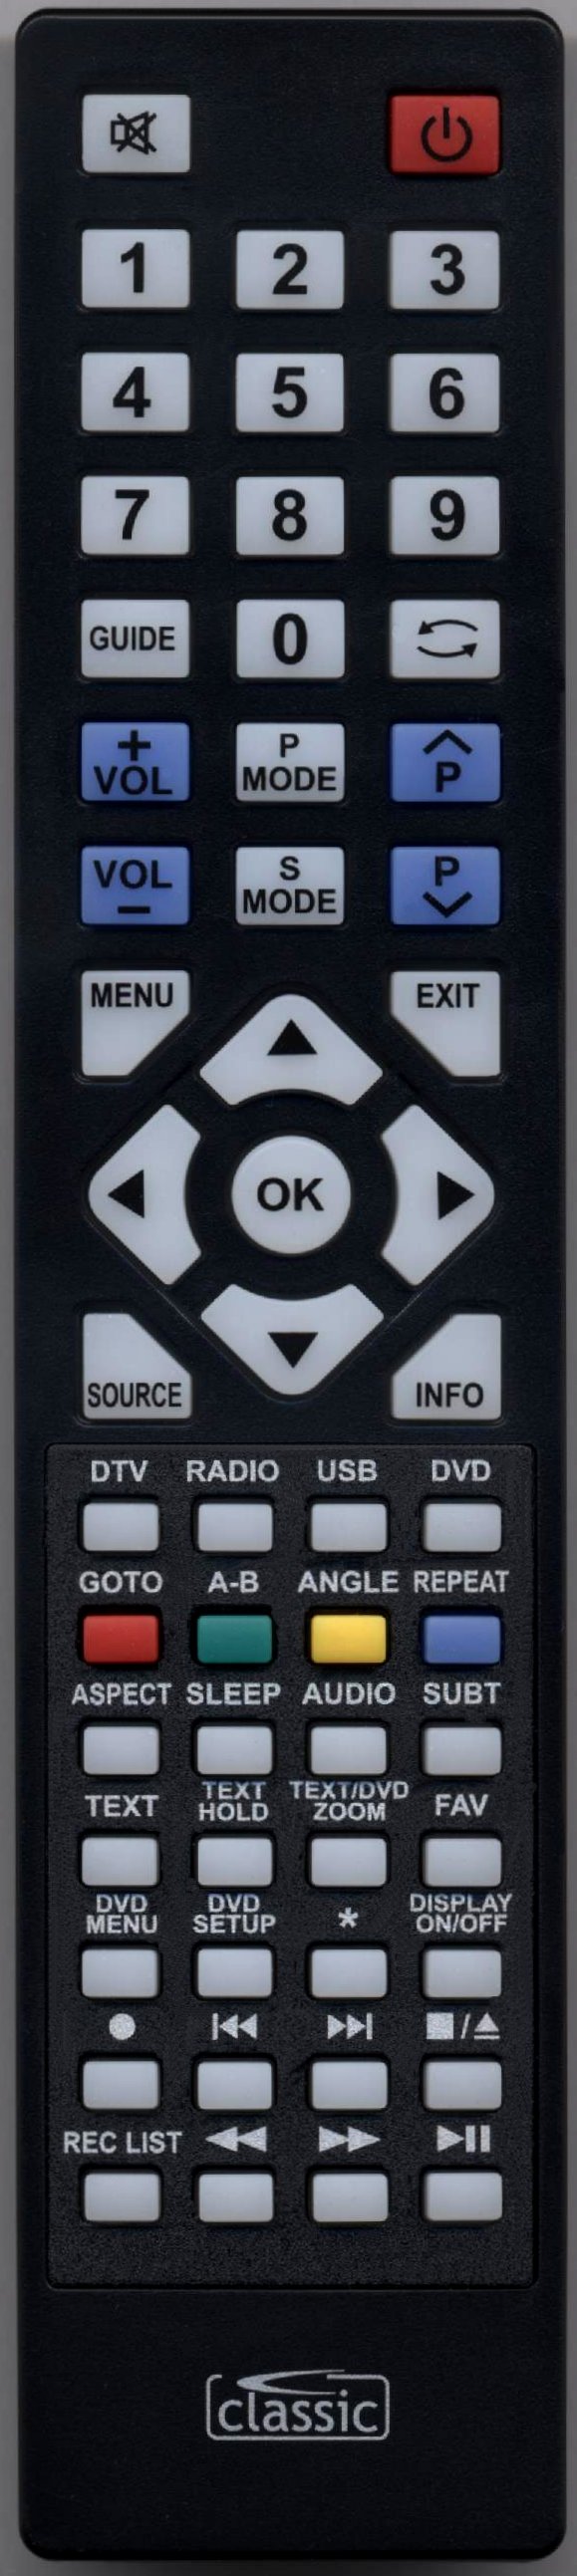 UMC 236/207O-GB-3B-EGDPS-UK Remote Control